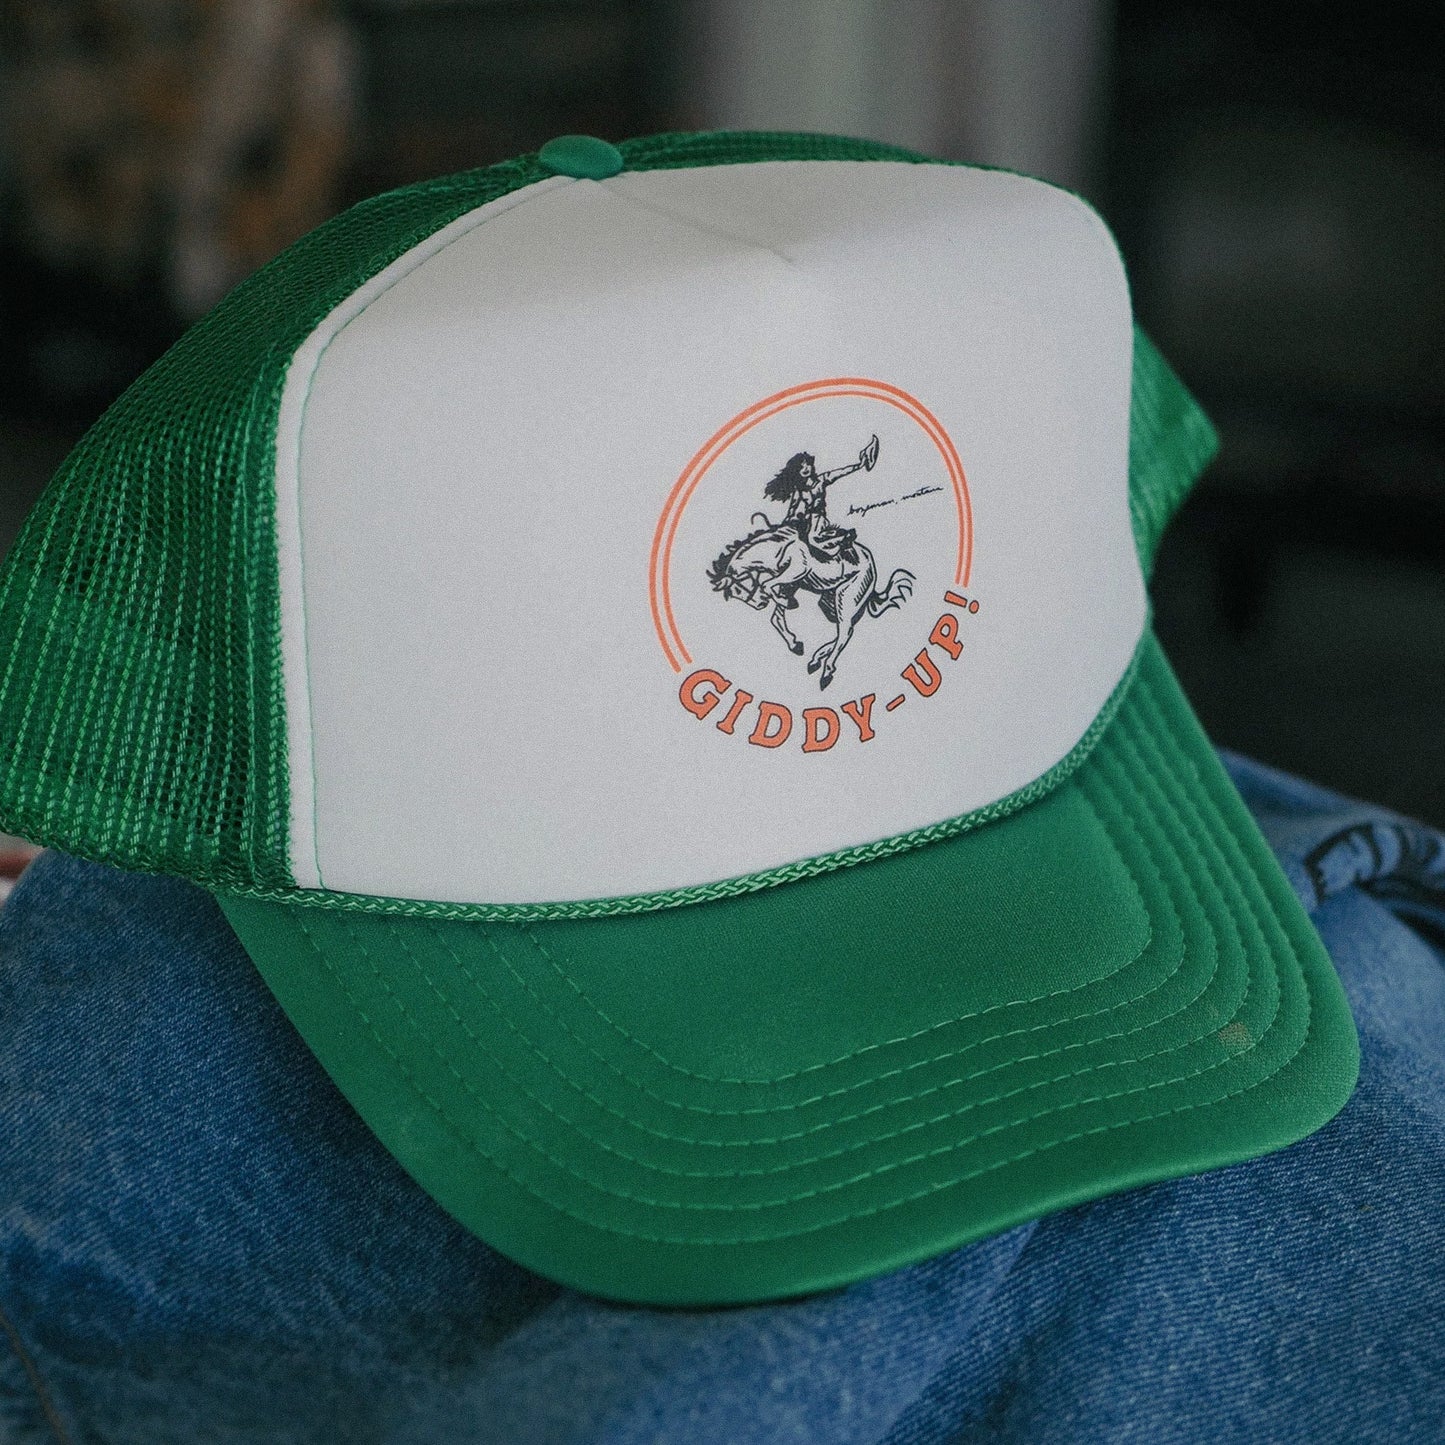 Giddy Up Green Trucker Hat